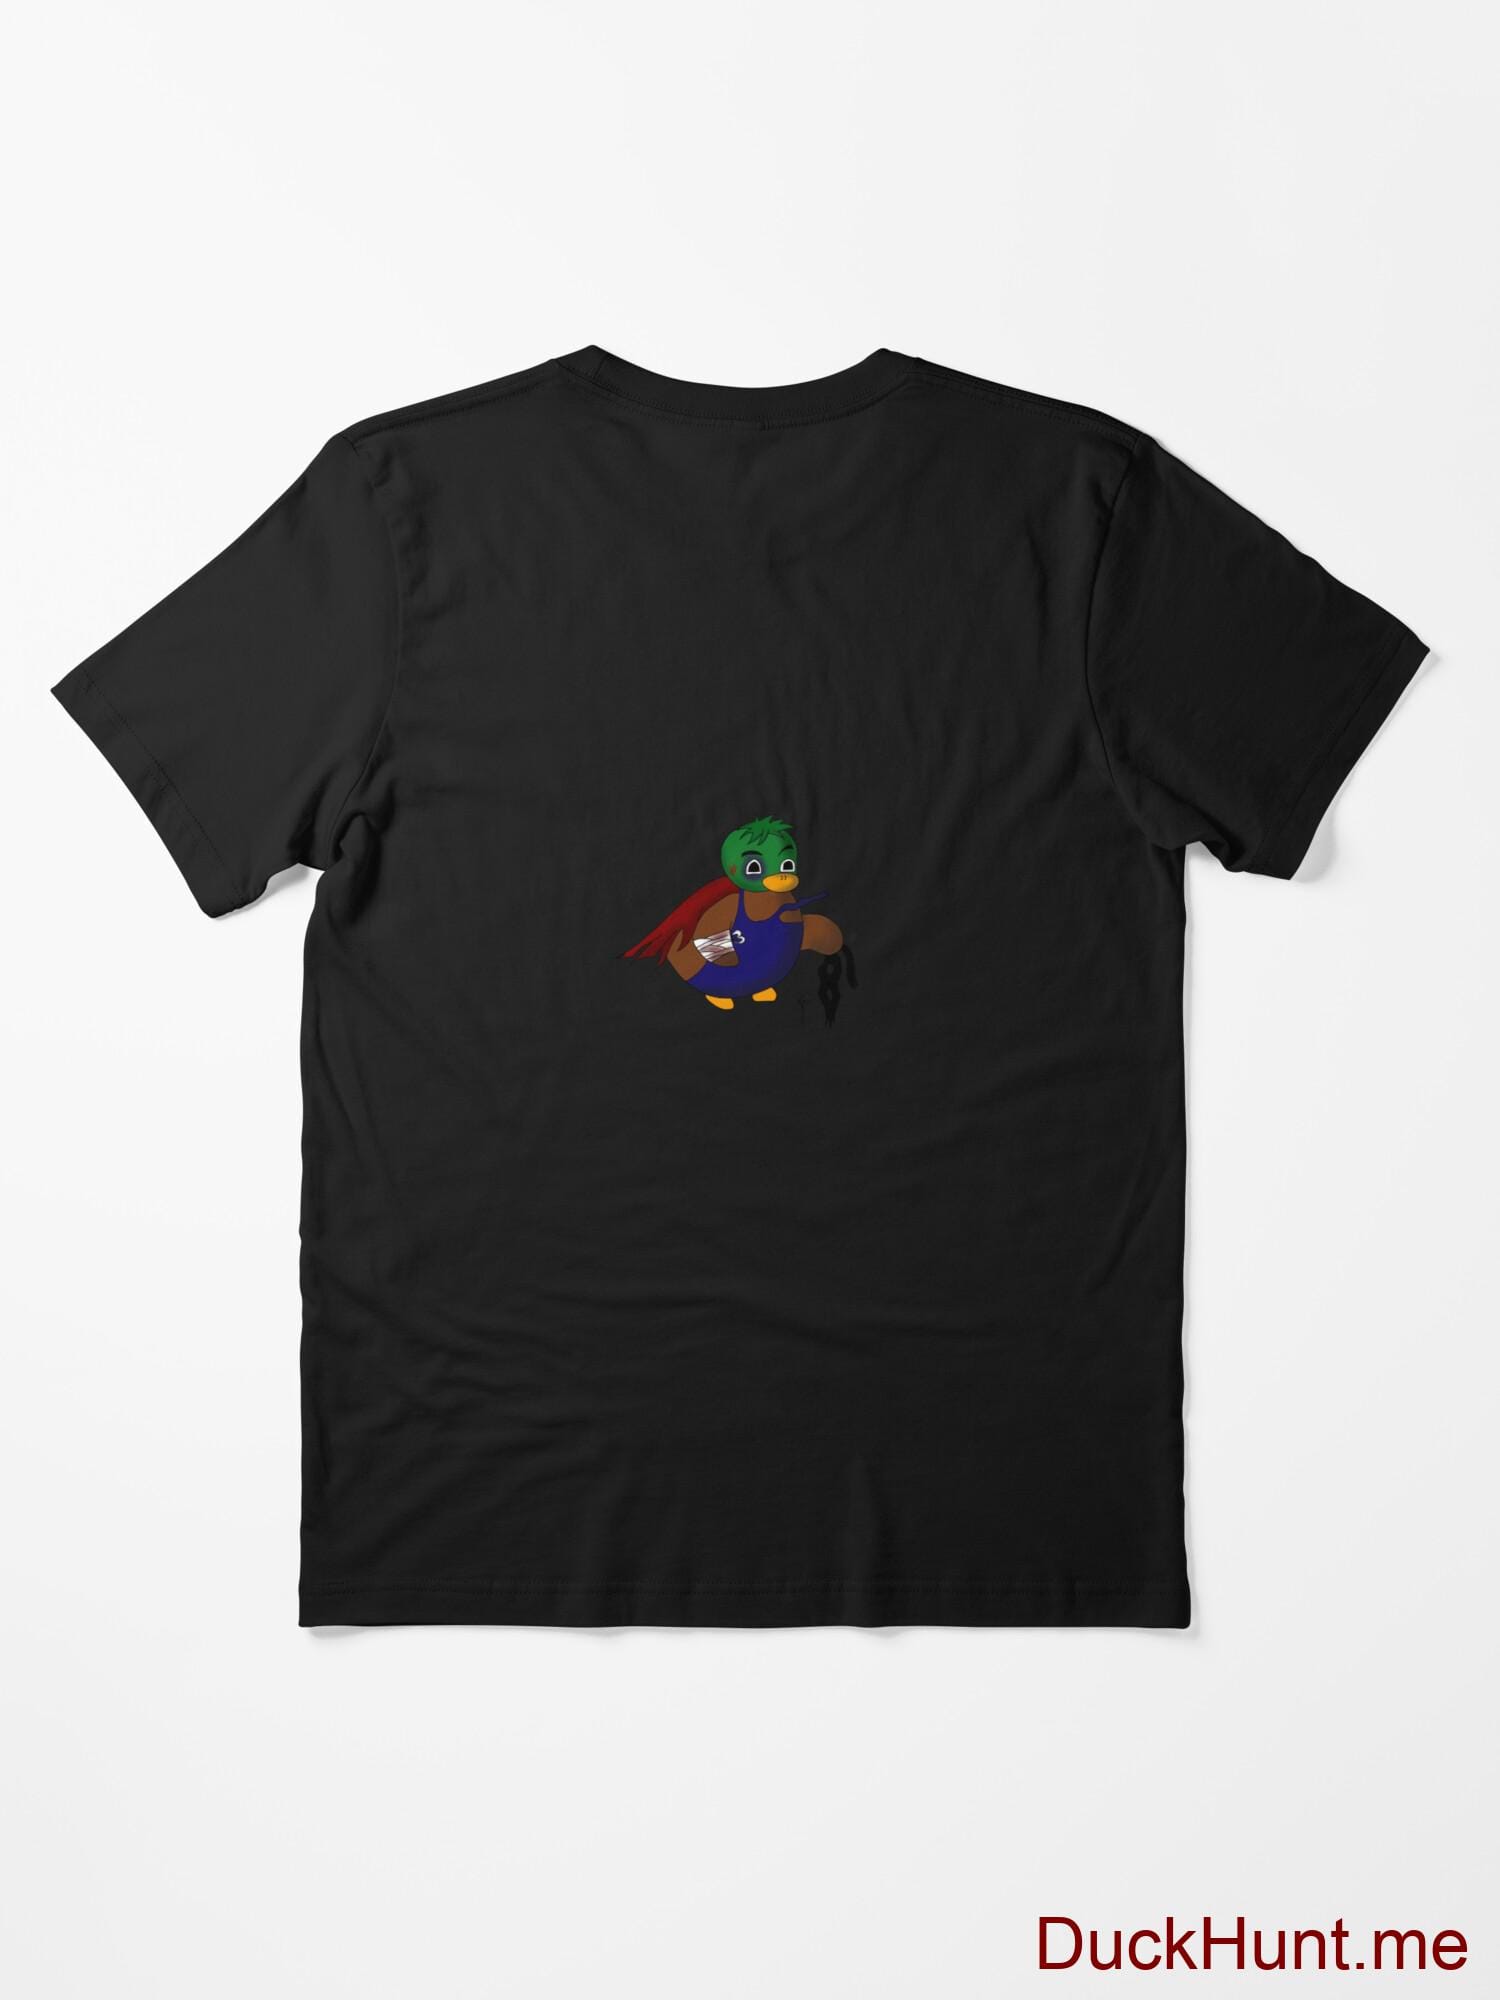 Dead DuckHunt Boss (smokeless) Black Essential T-Shirt (Back printed) alternative image 1